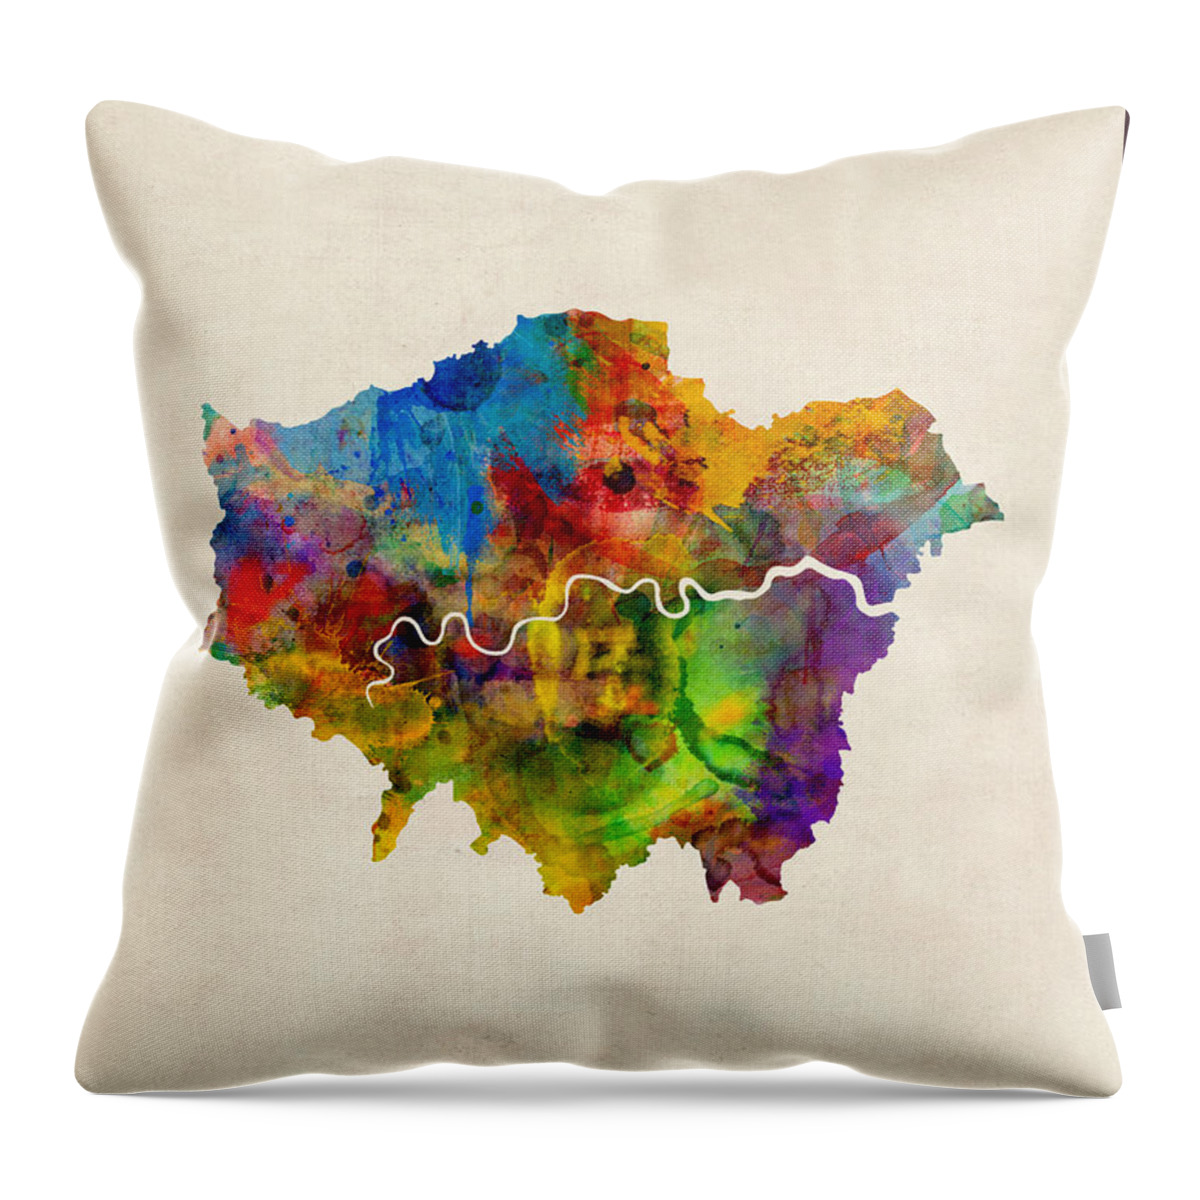 London Throw Pillow featuring the digital art London Watercolor Map by Michael Tompsett